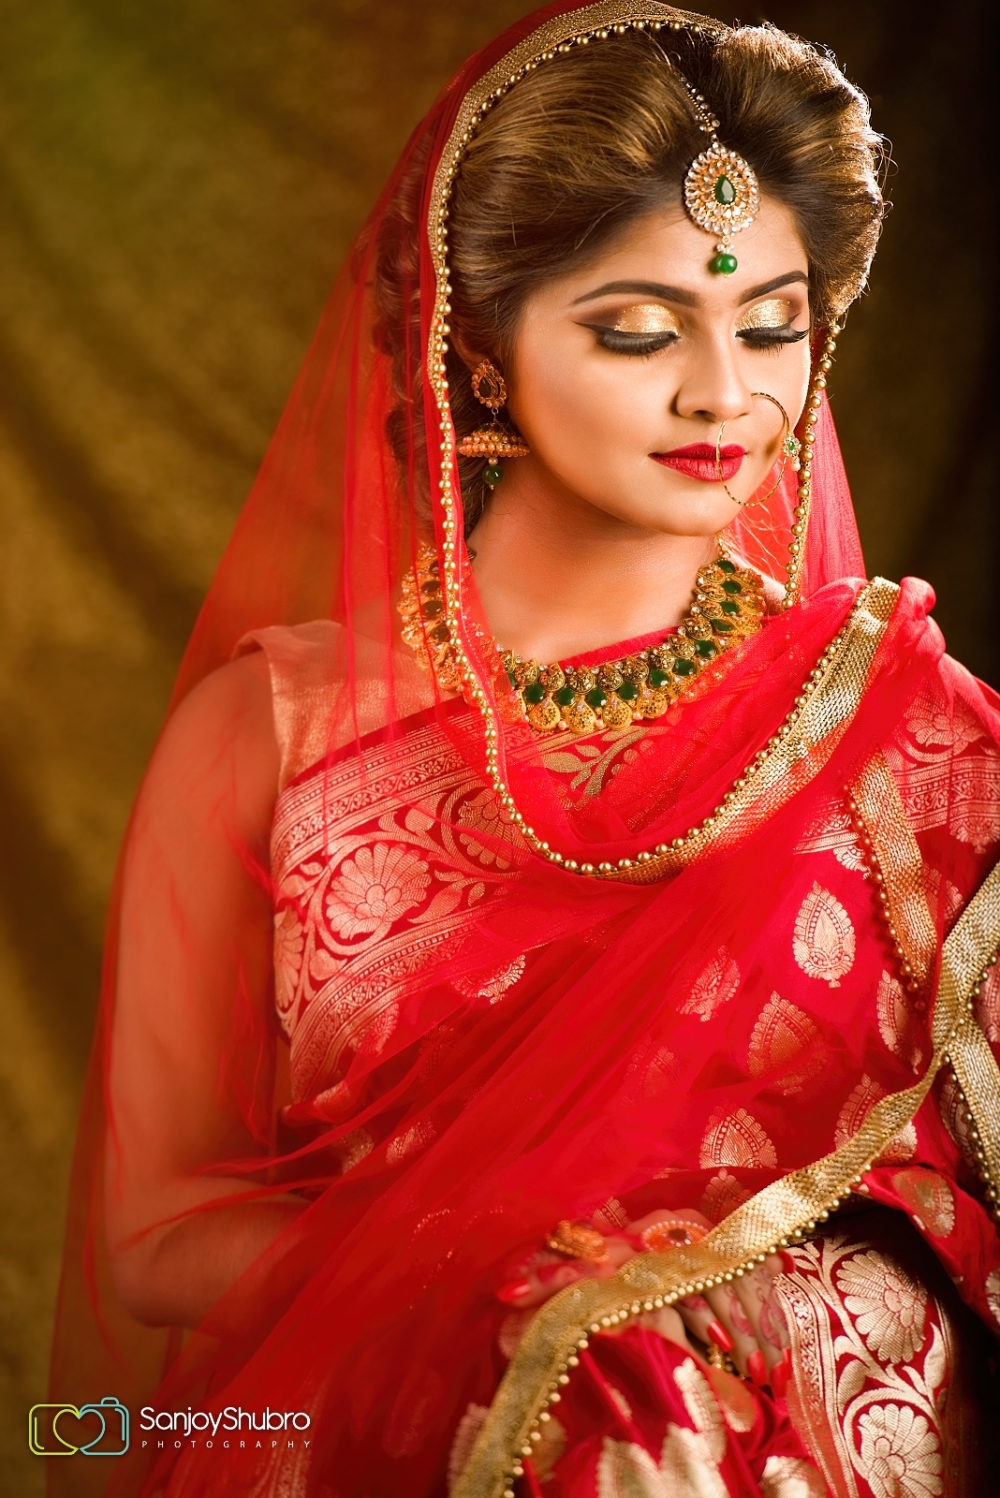 Bangladeshi bride, trendy bride, makeup and hairstyle